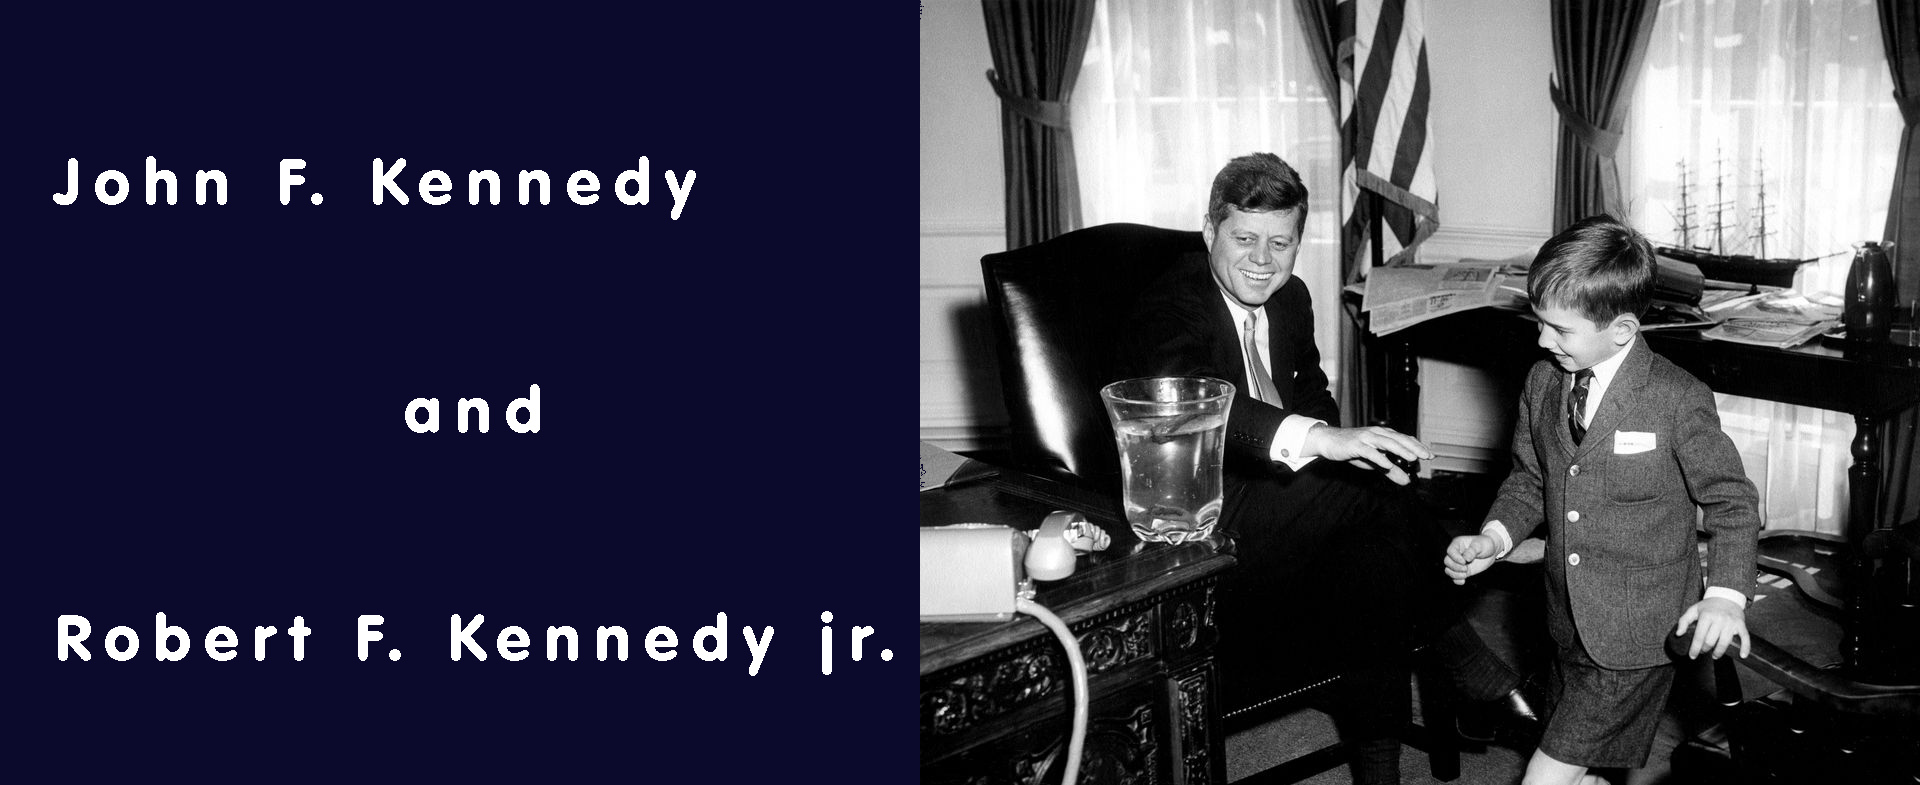 John F. Kennedy and Robert F. Kennedy jr